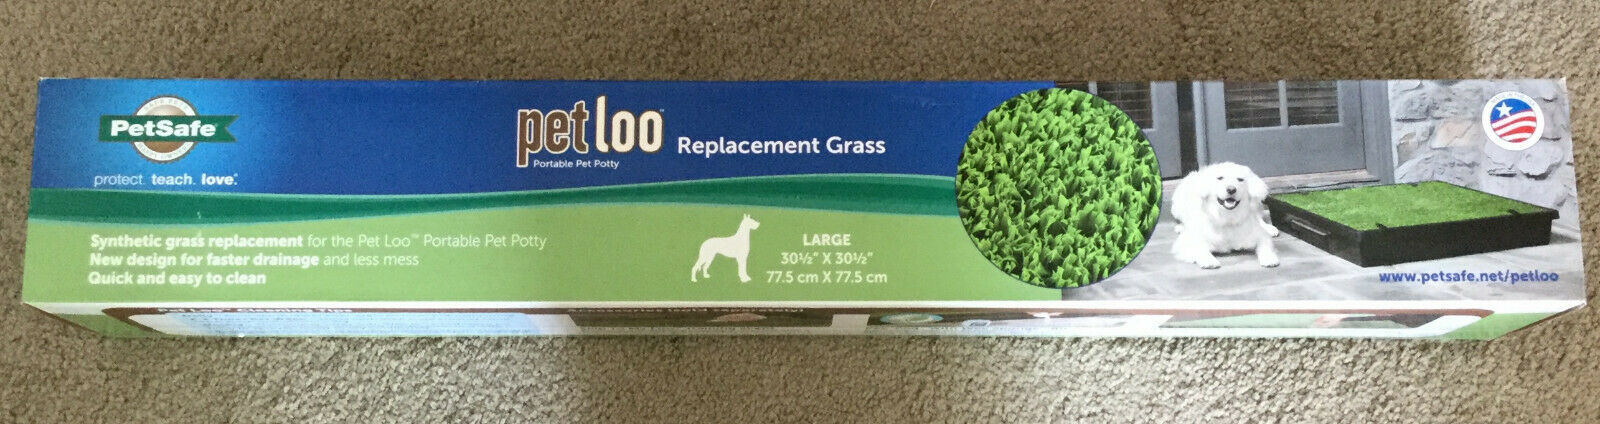 Petsafe - Pet Loo Replacement Grass - Large ~ Free Shipping